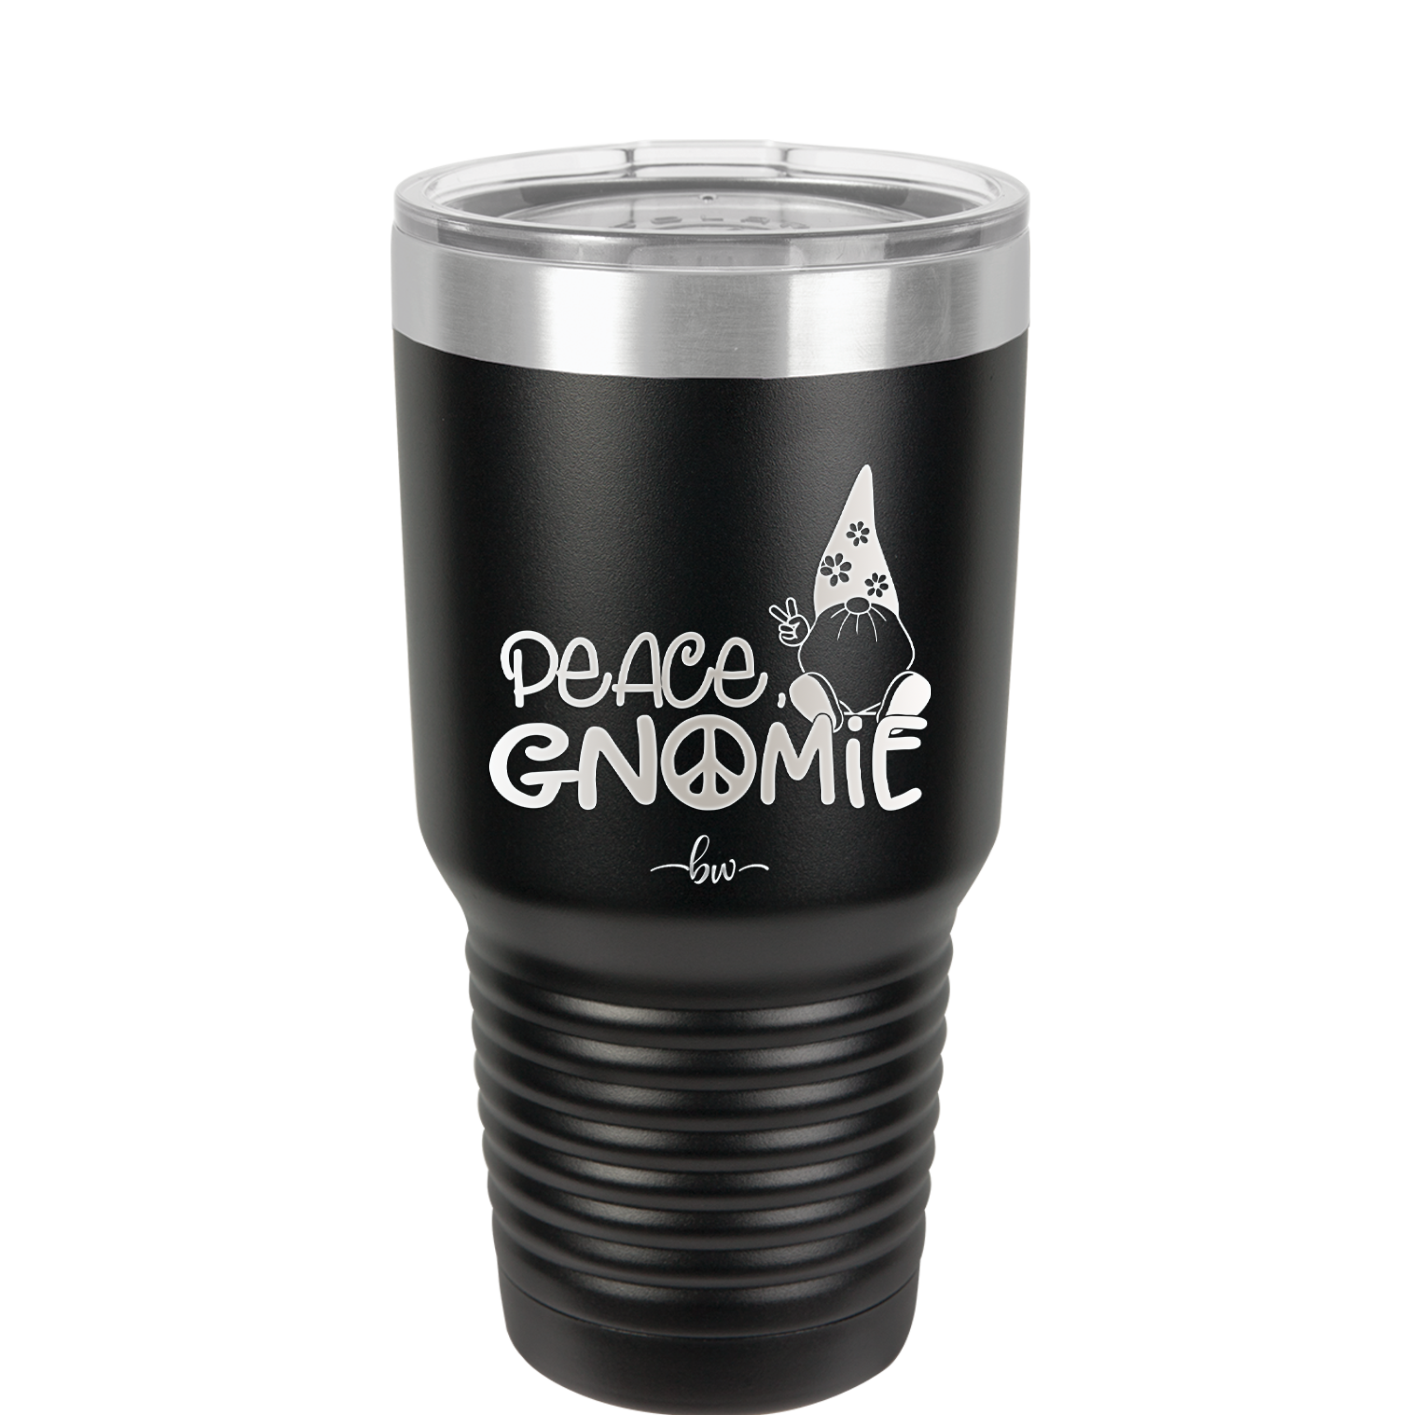 Peace Gnomie 2 - Laser Engraved Stainless Steel Drinkware - 2531 -